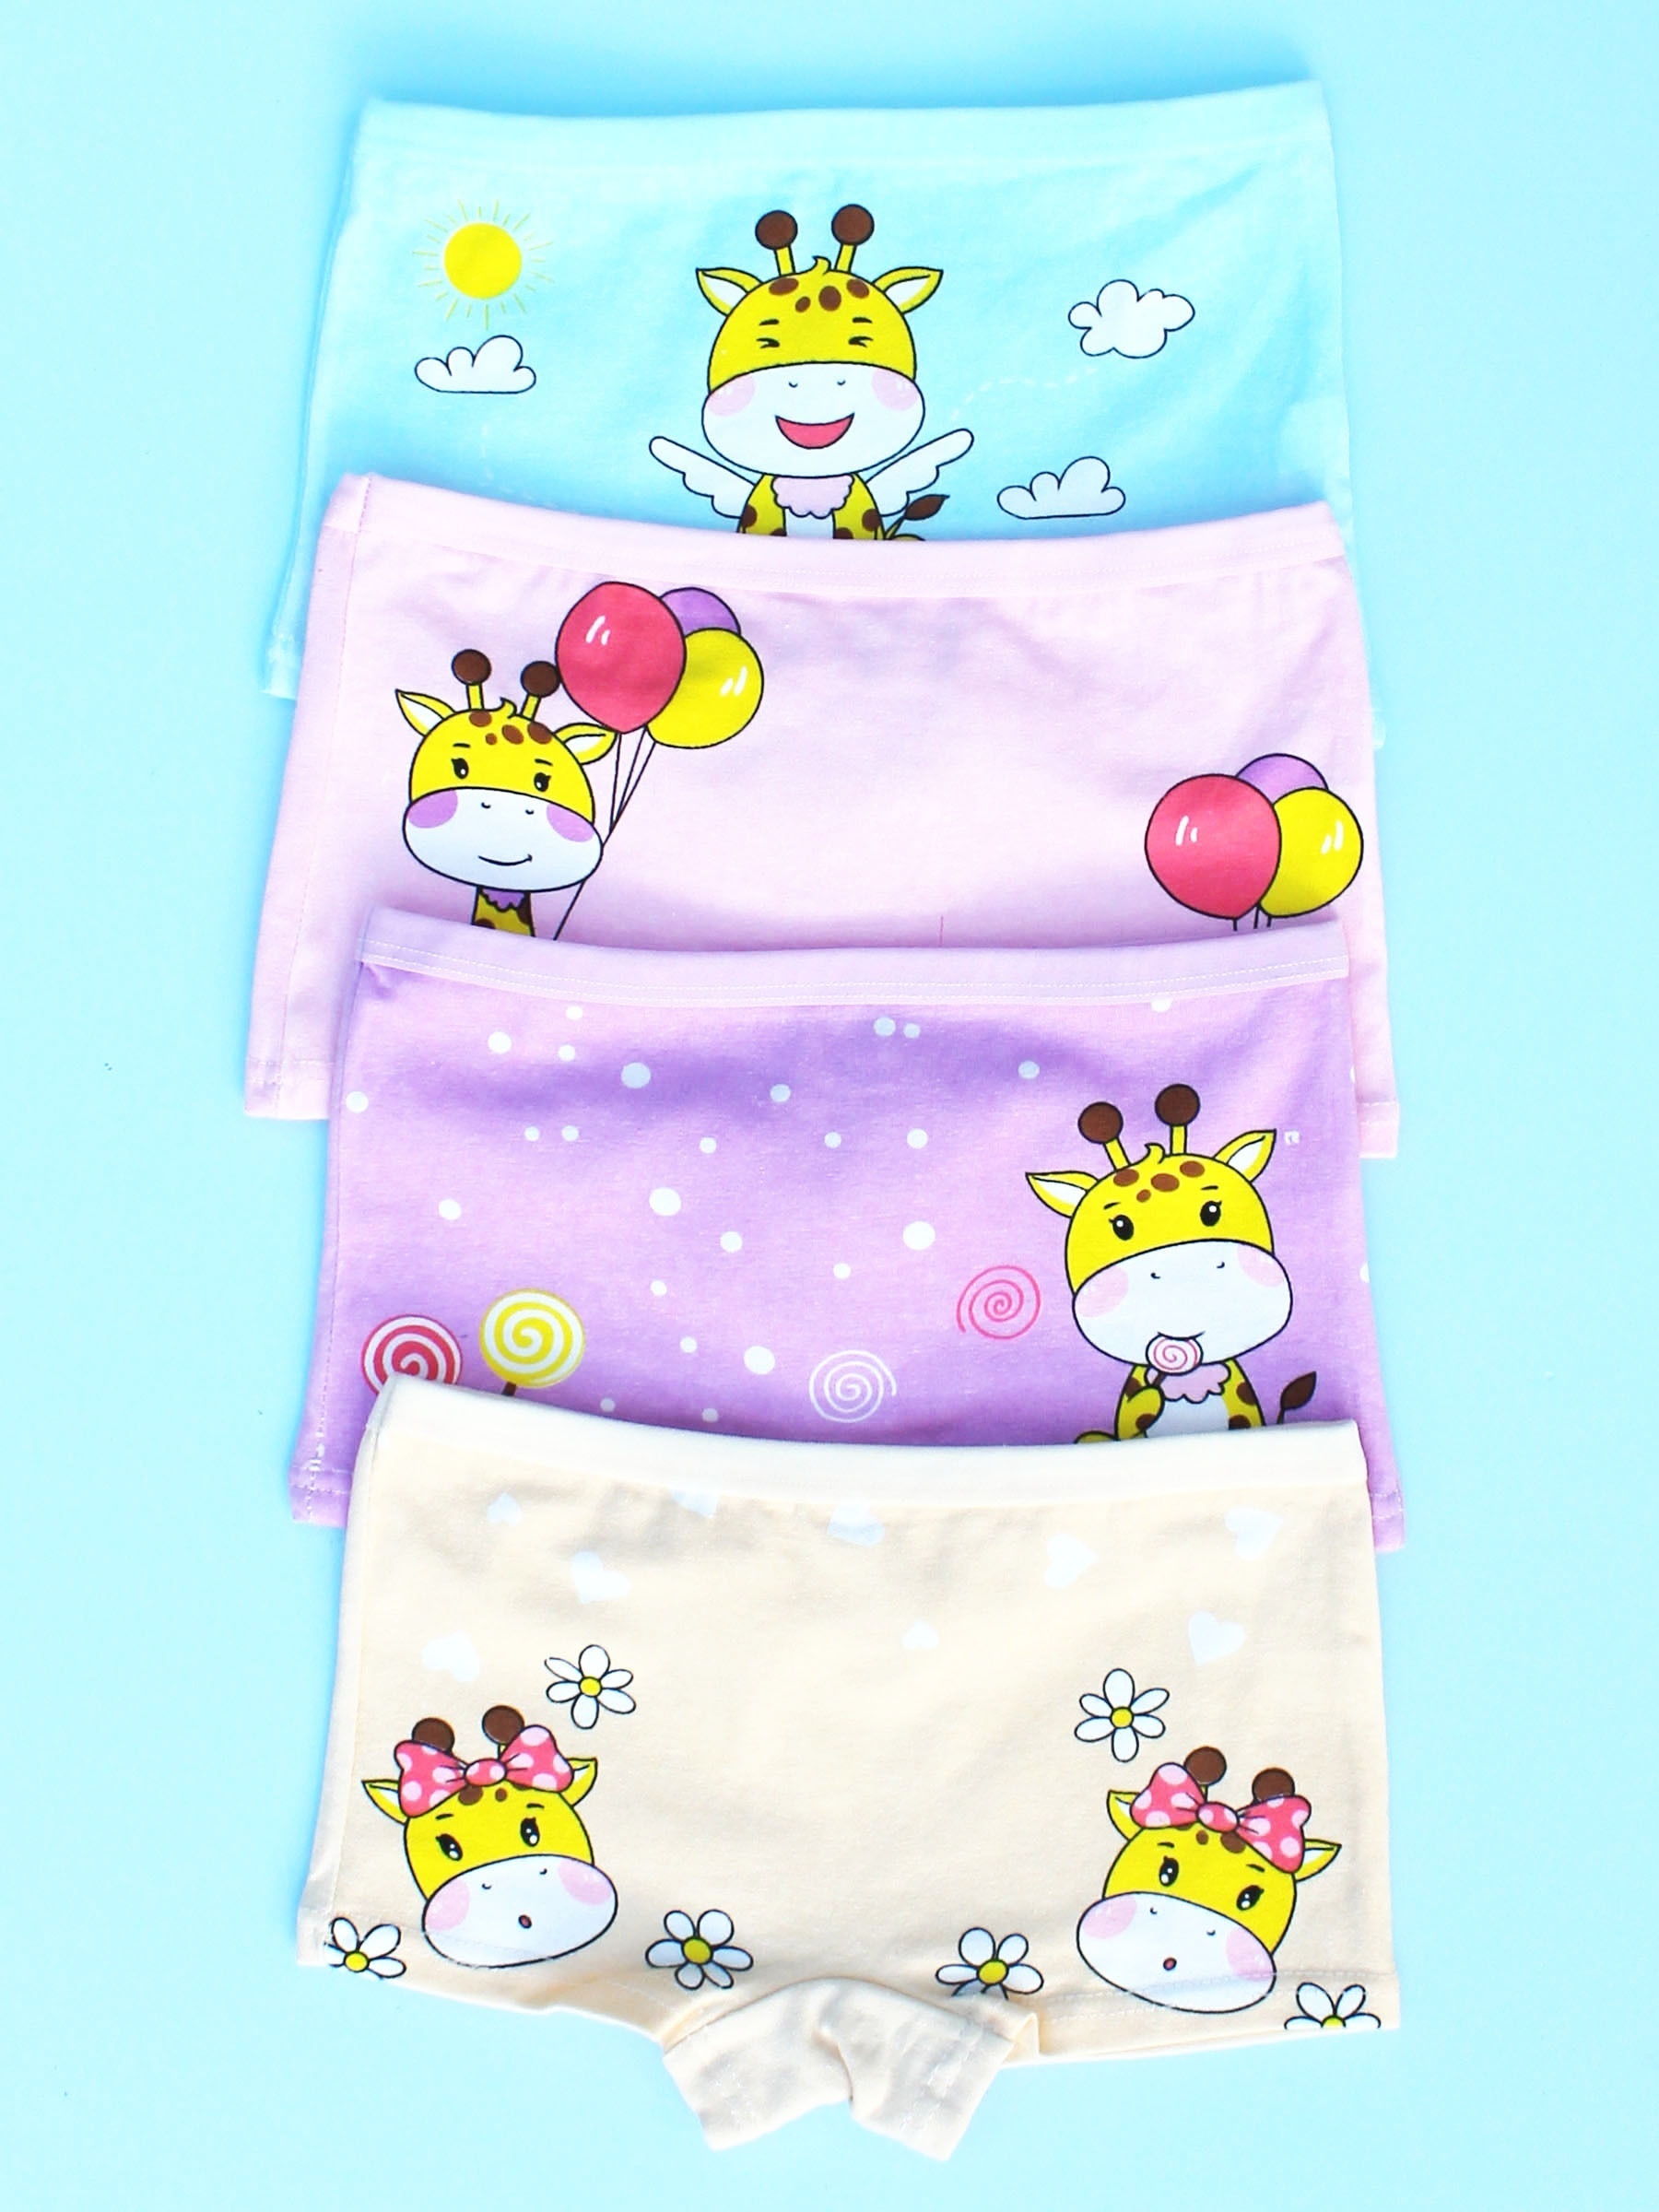 Kids Panties With Print For Girls Children's Underwear Baby